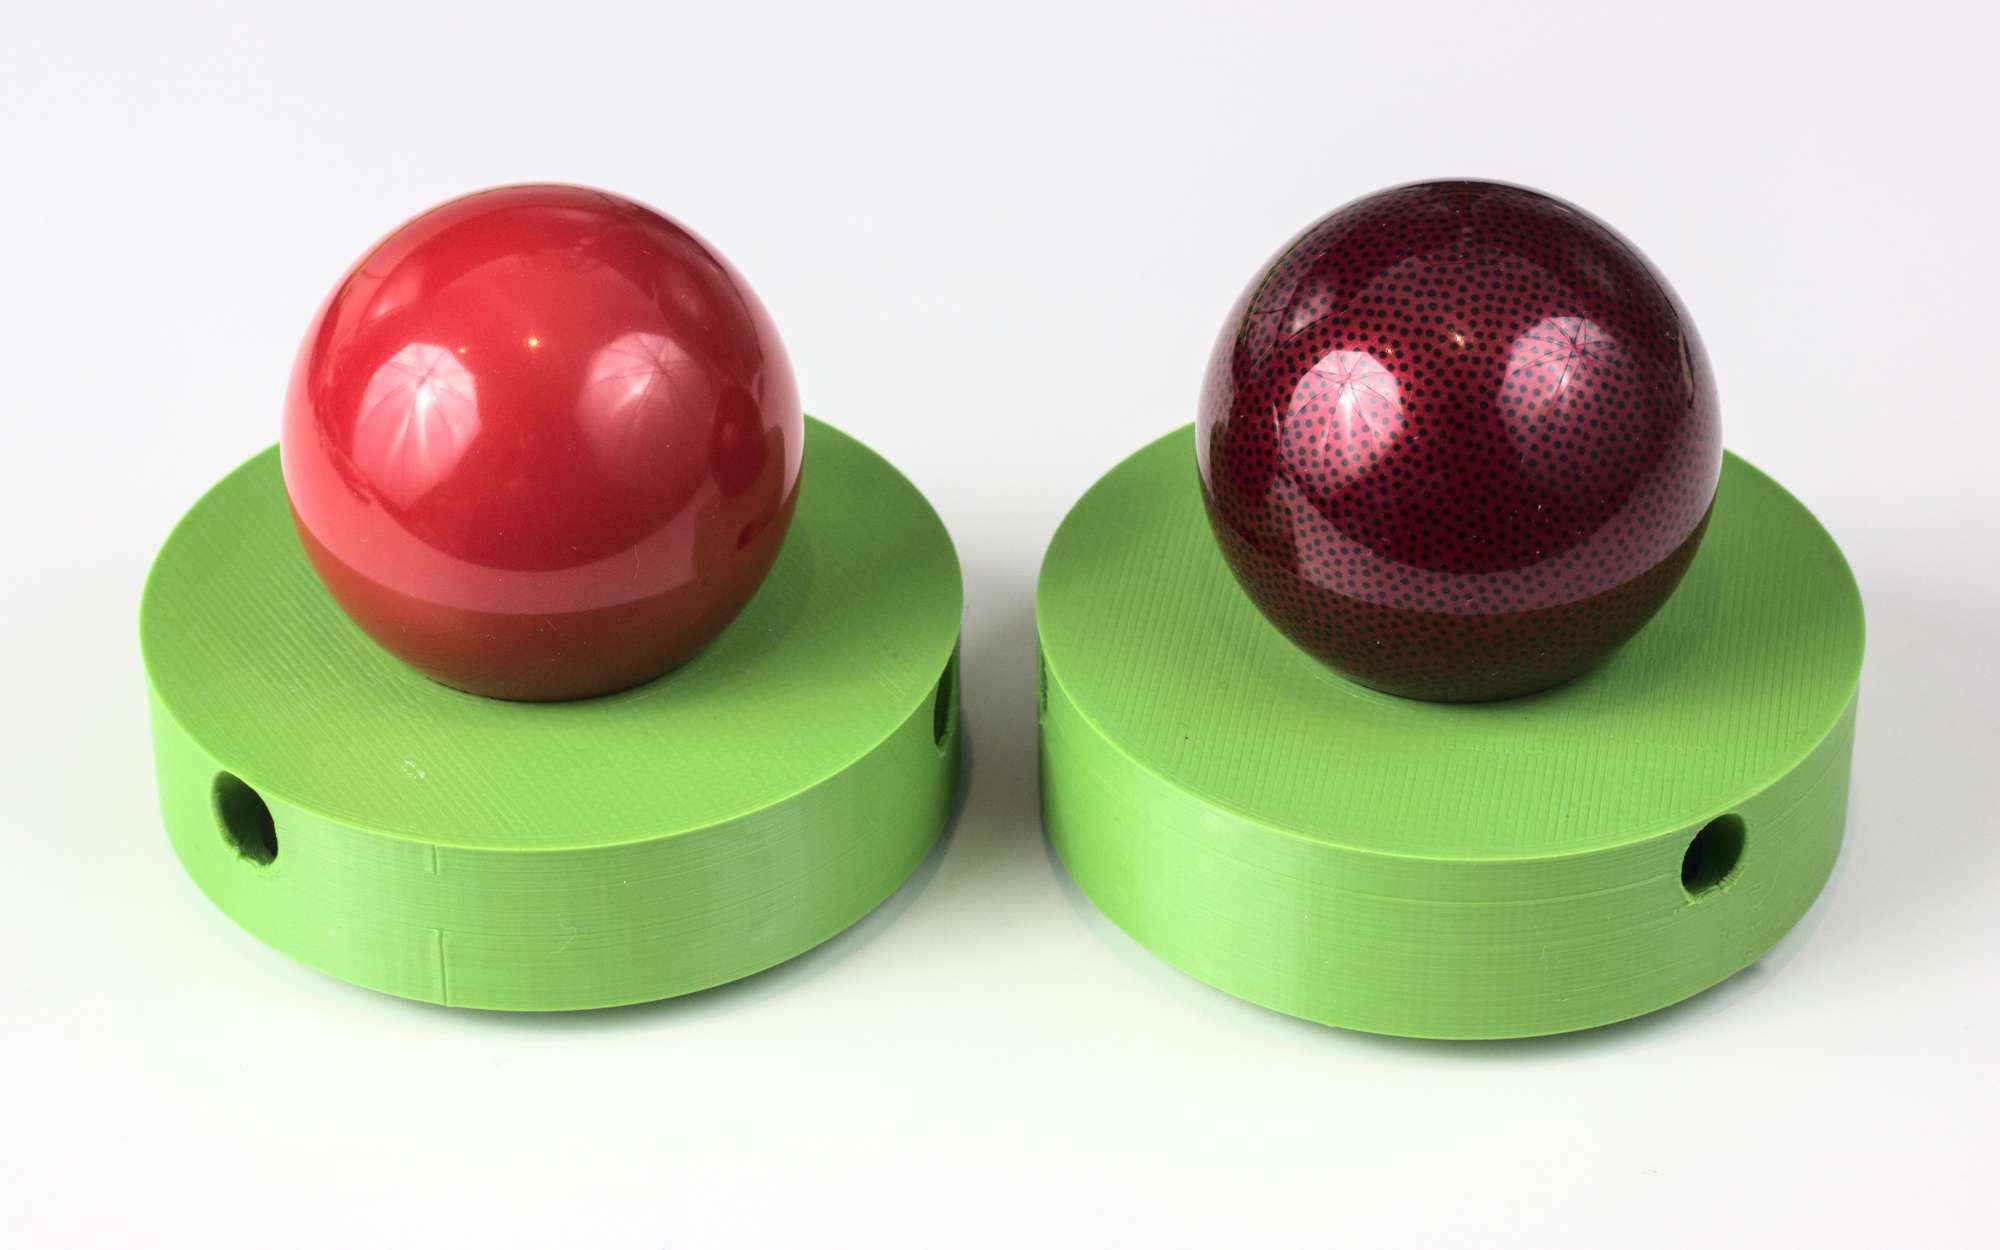 Polished pool ball next to slightly shinier ball. Both red.